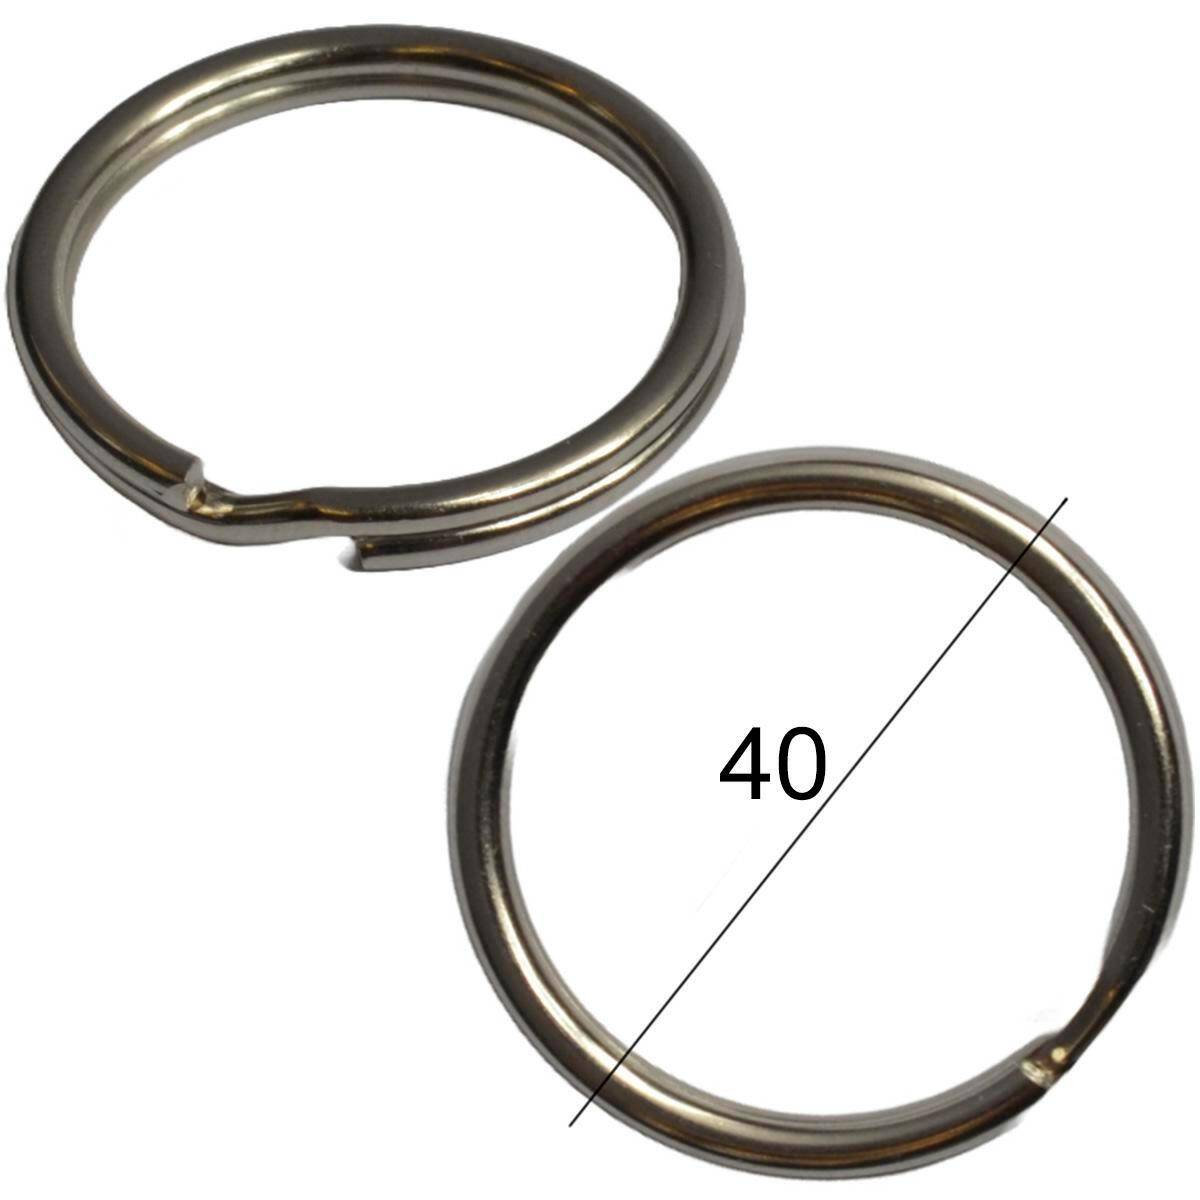 Key rings - 40 mm